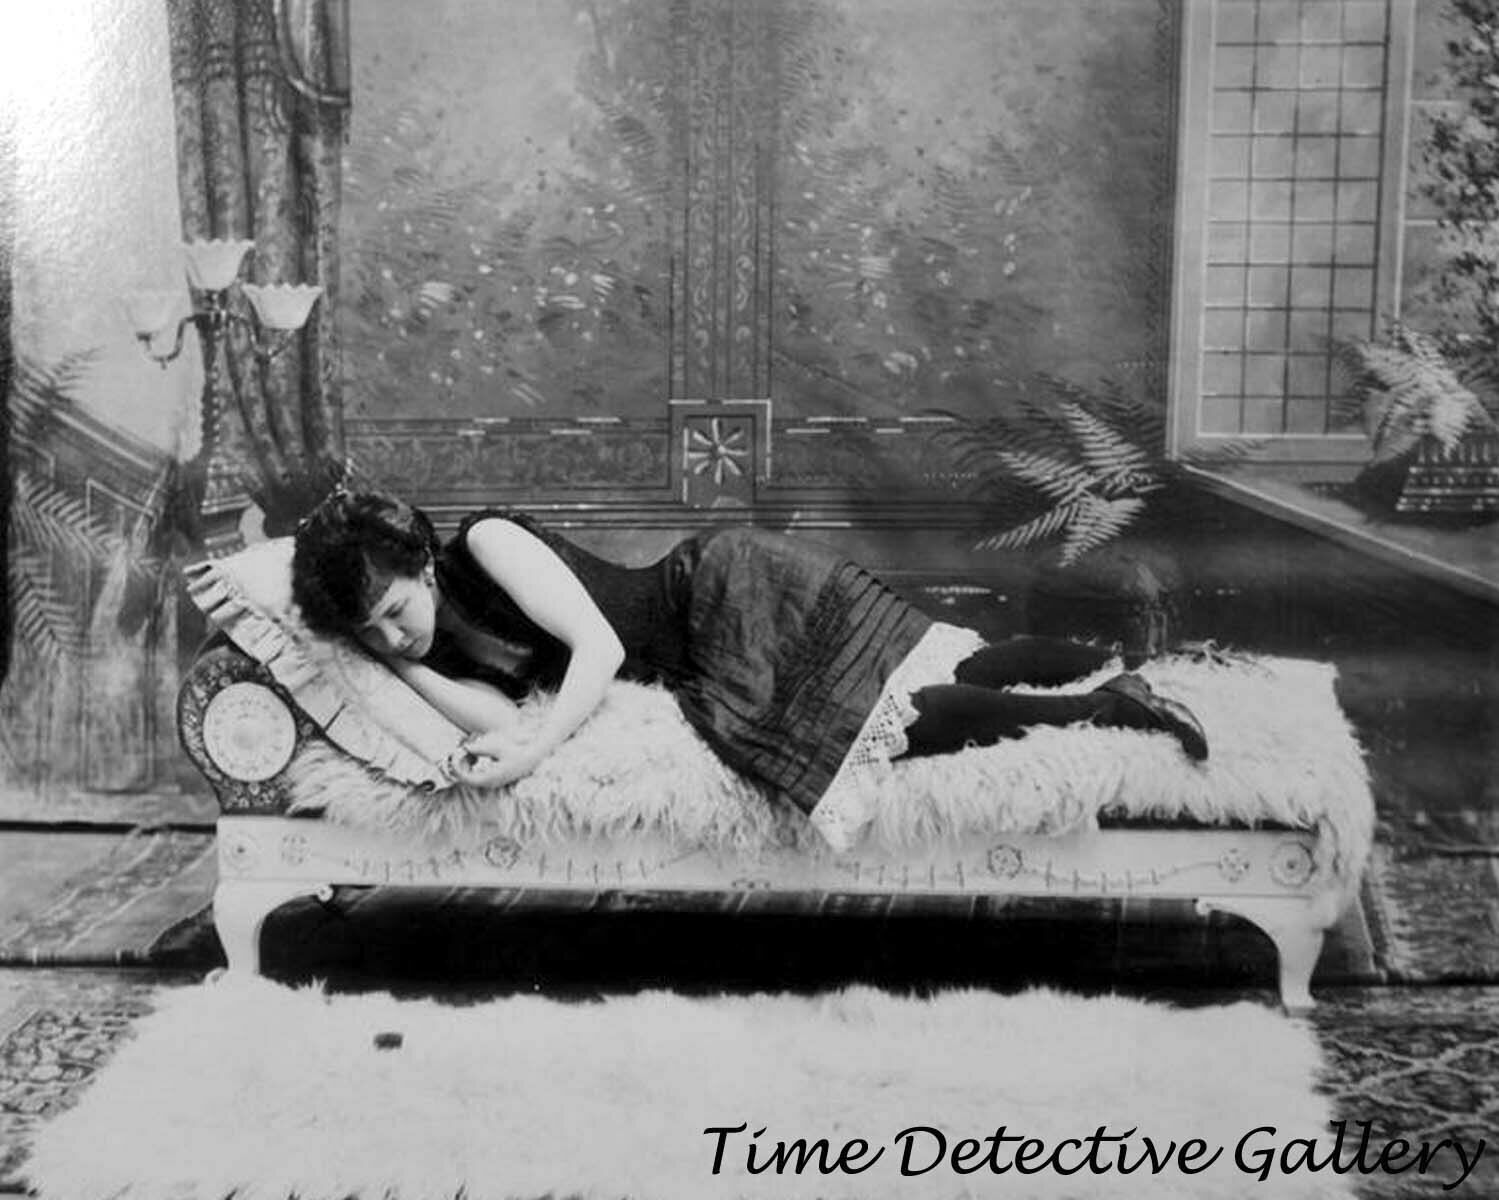 Storyville Prostitute #18 by E.J. Bellocq, New Orleans, LA -Historic Photo Print